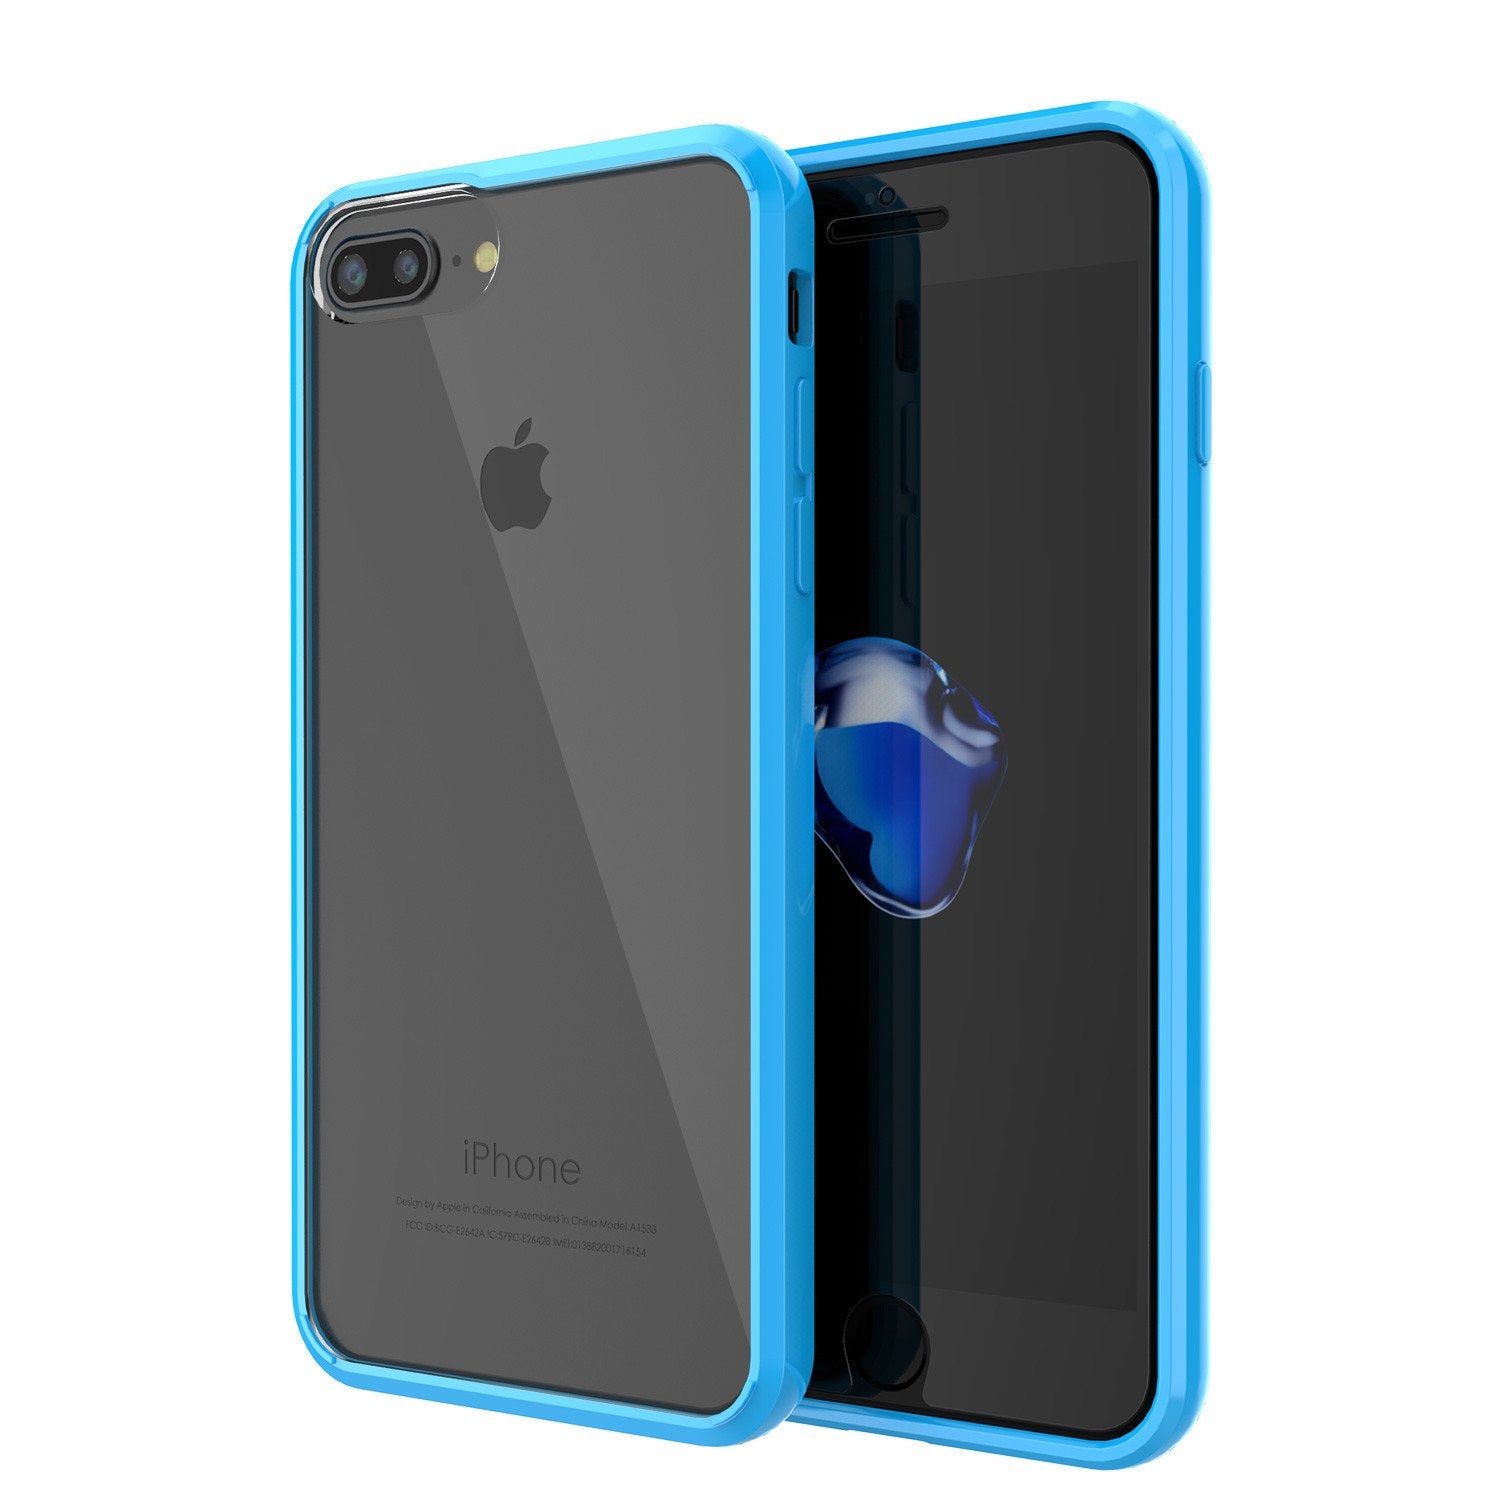 iPhone 7+ Plus Case Punkcase® LUCID 2.0 Light Blue Series for Apple iPhone 7+ Plus Slim | Slick Frame Lifetime Warranty Exchange